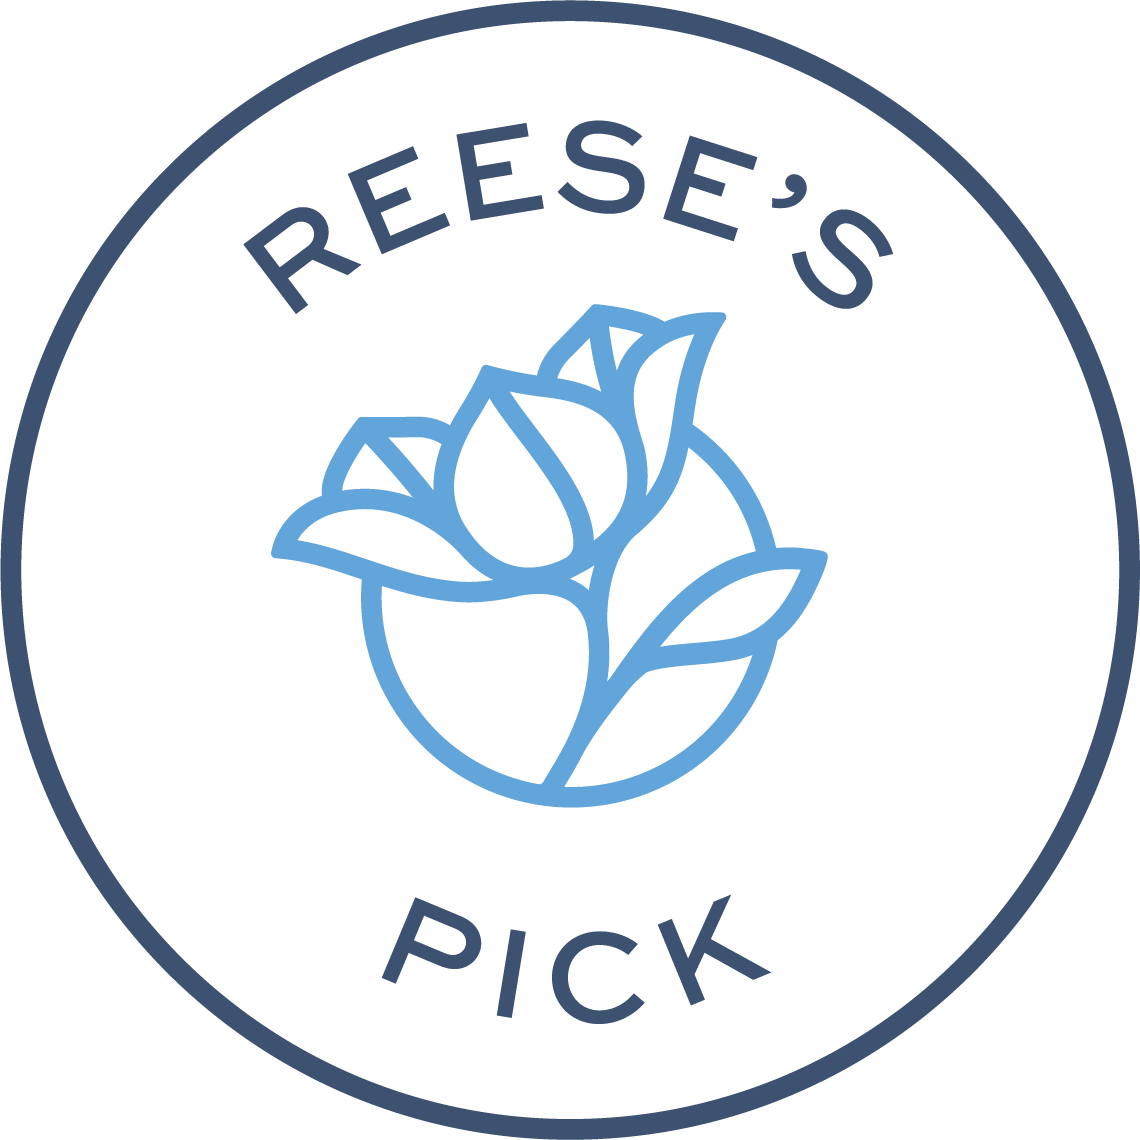 Reese's Pick